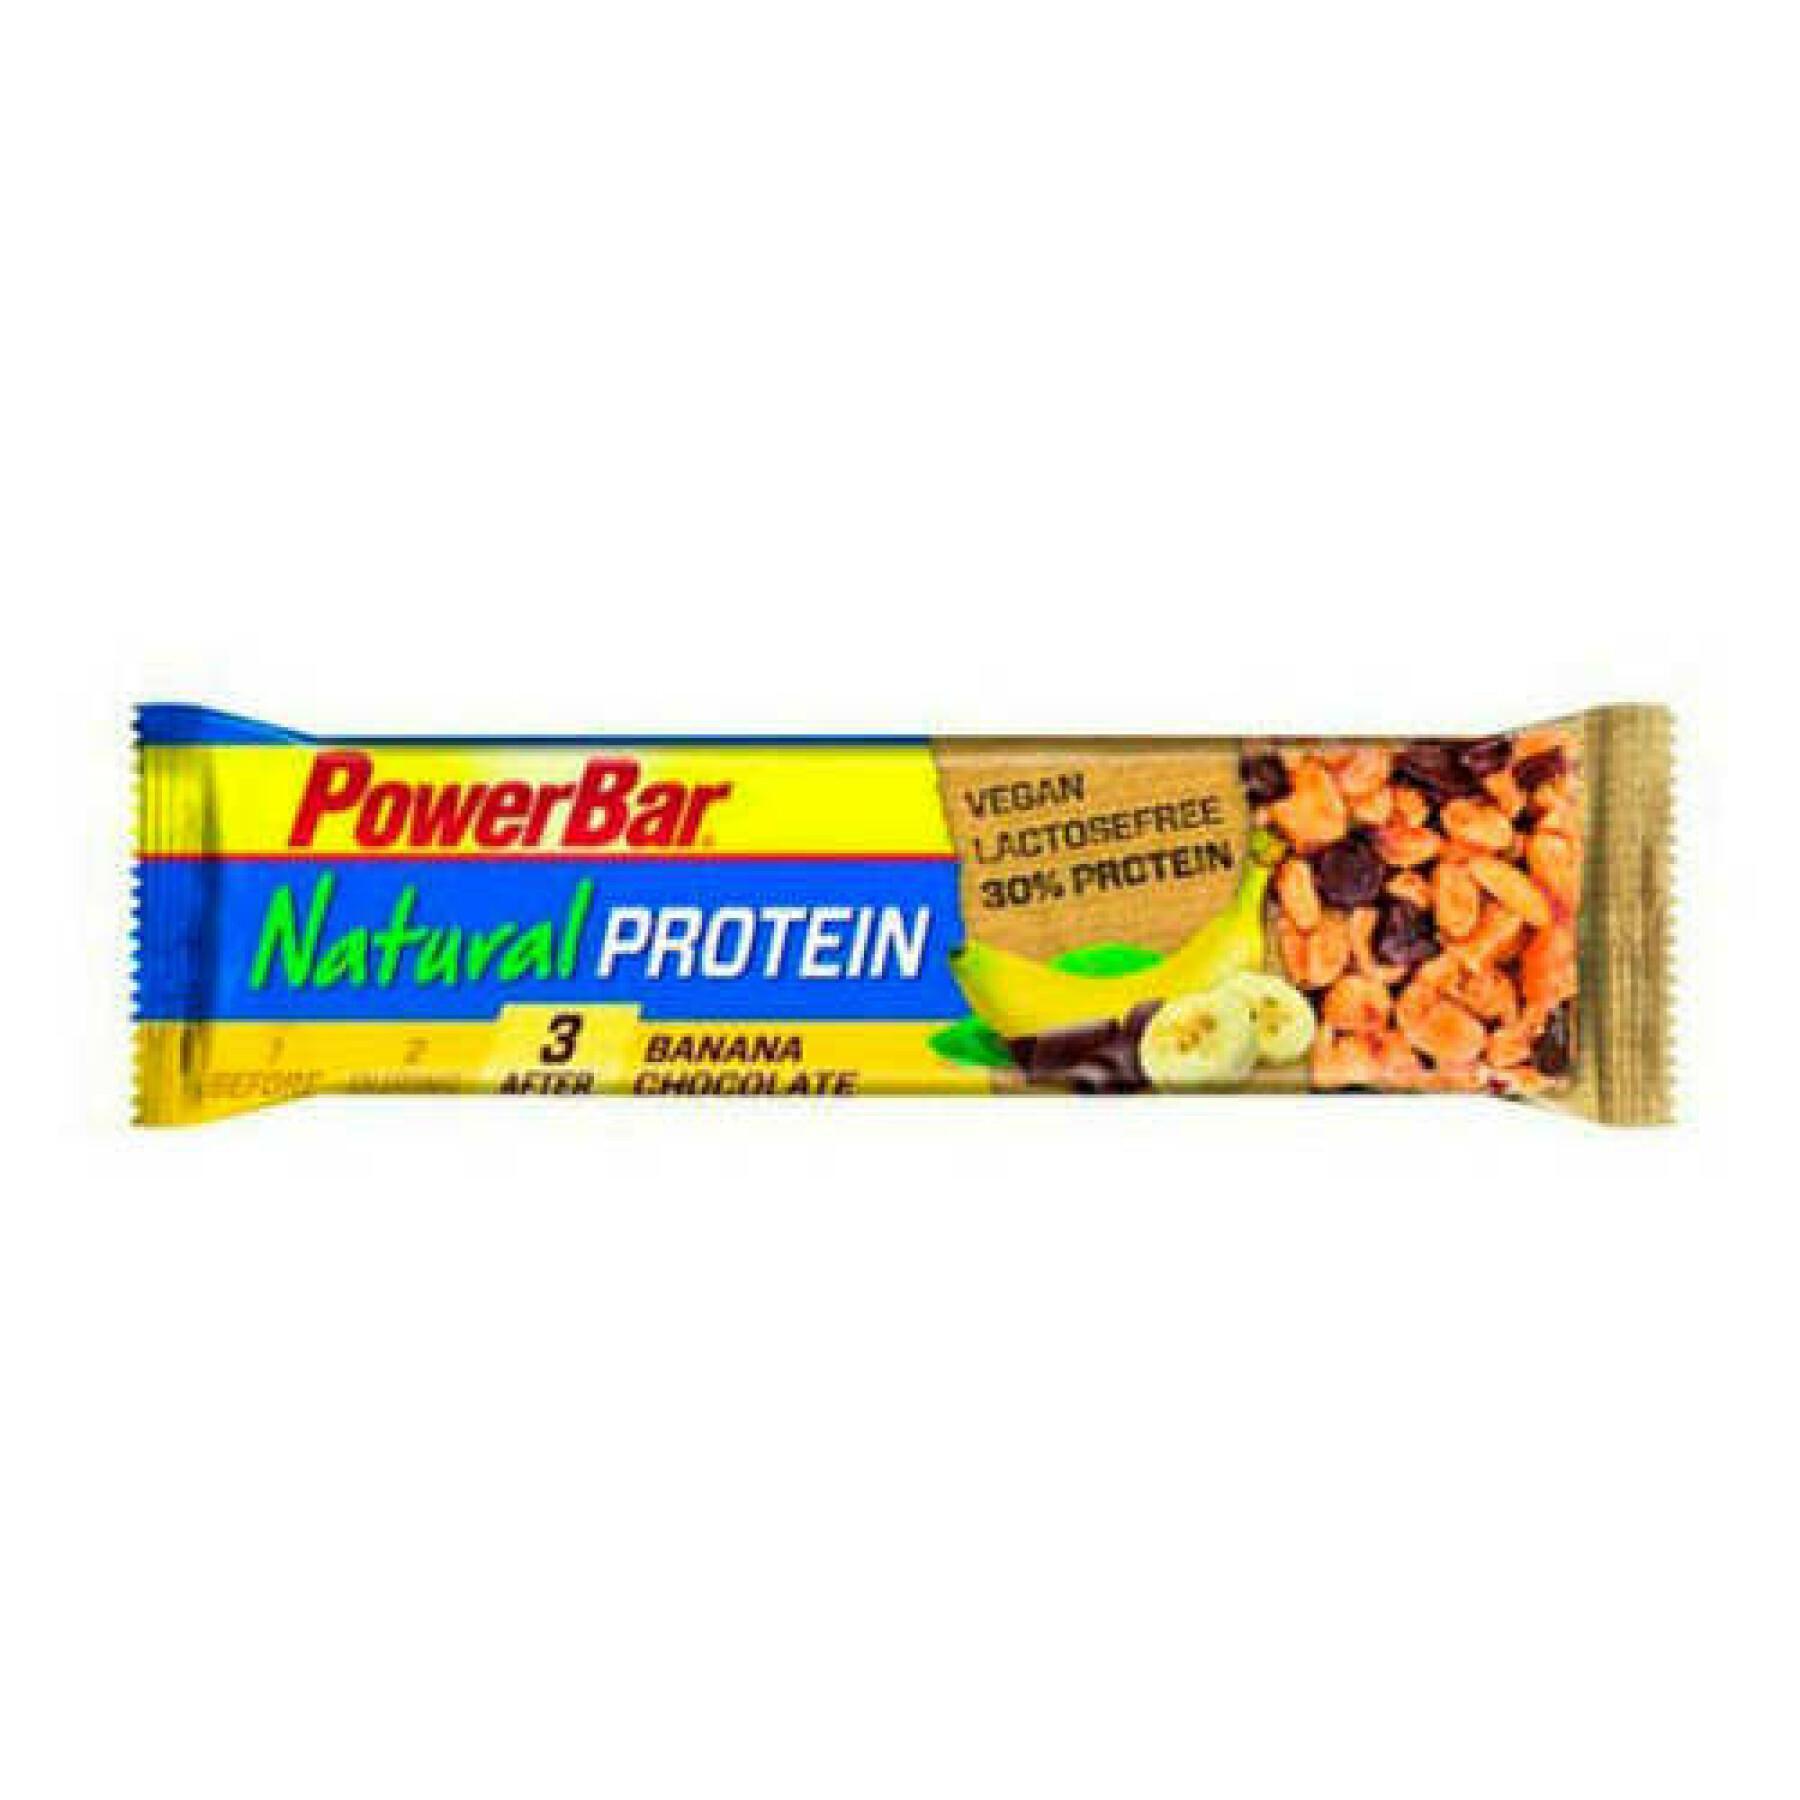 Batch of 24 bars PowerBar Natural Protein Vegan - Banana Chocolate